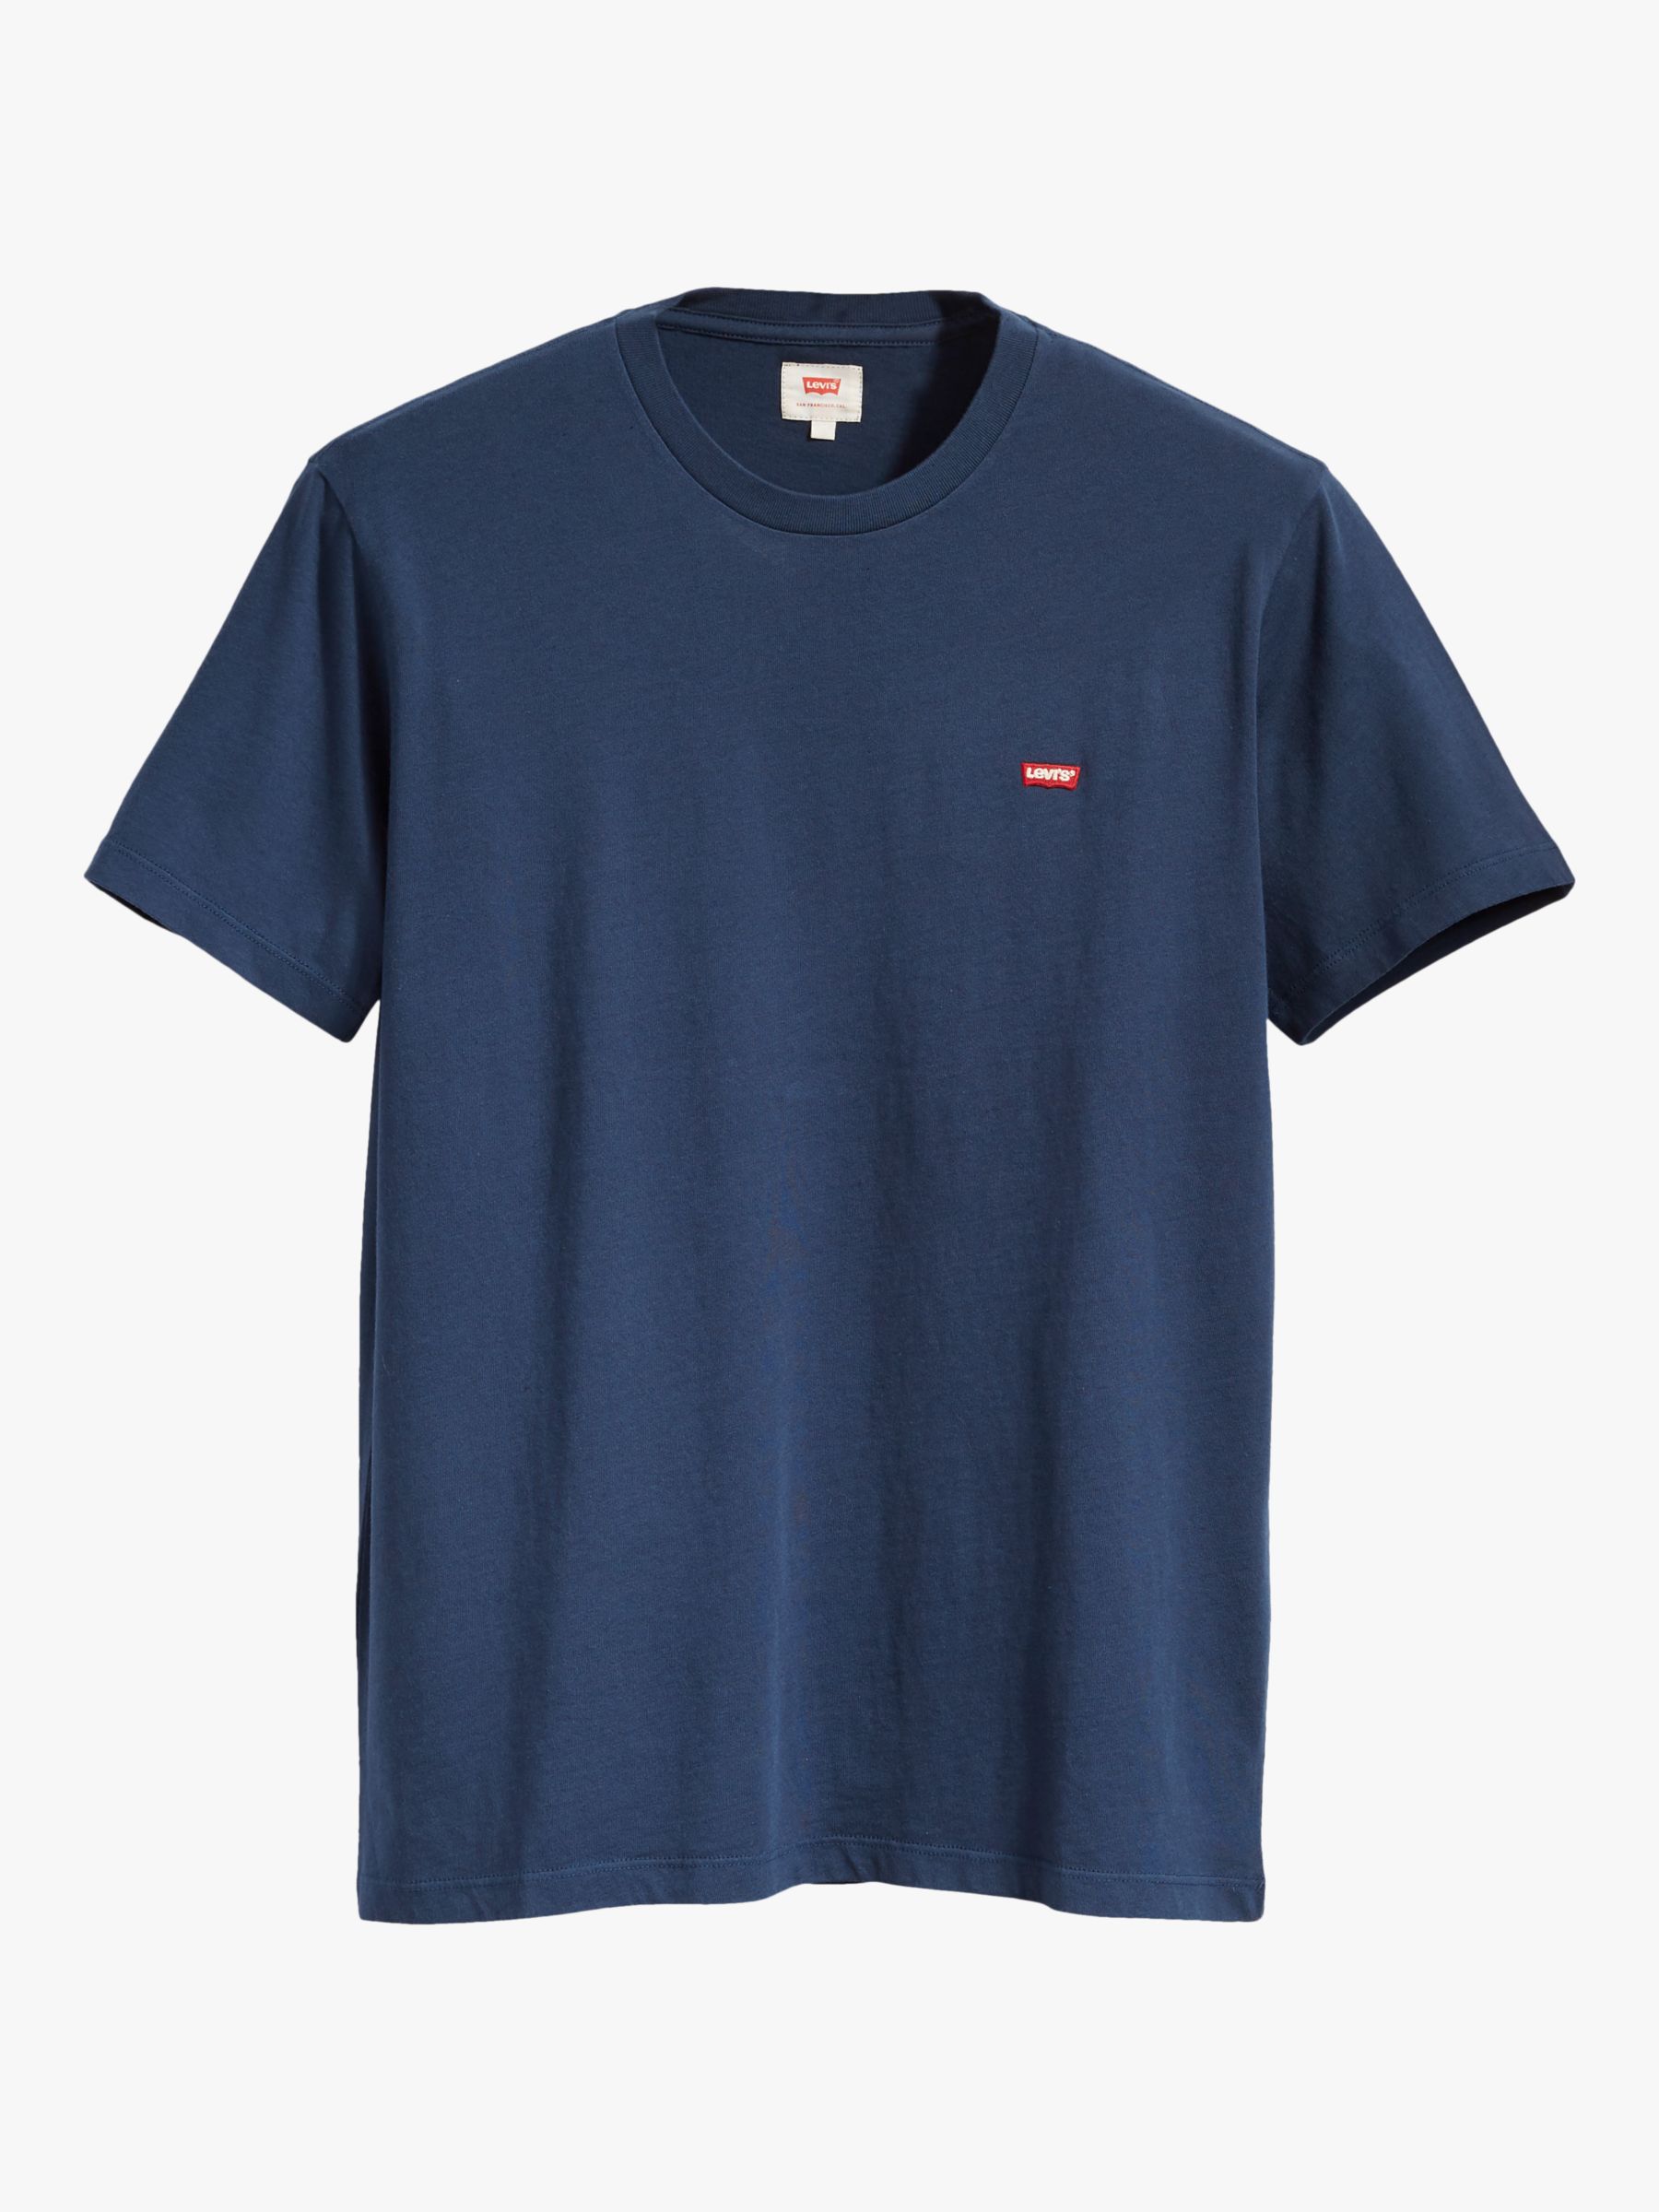 Levi's Original T-Shirt, Blue at John Lewis & Partners